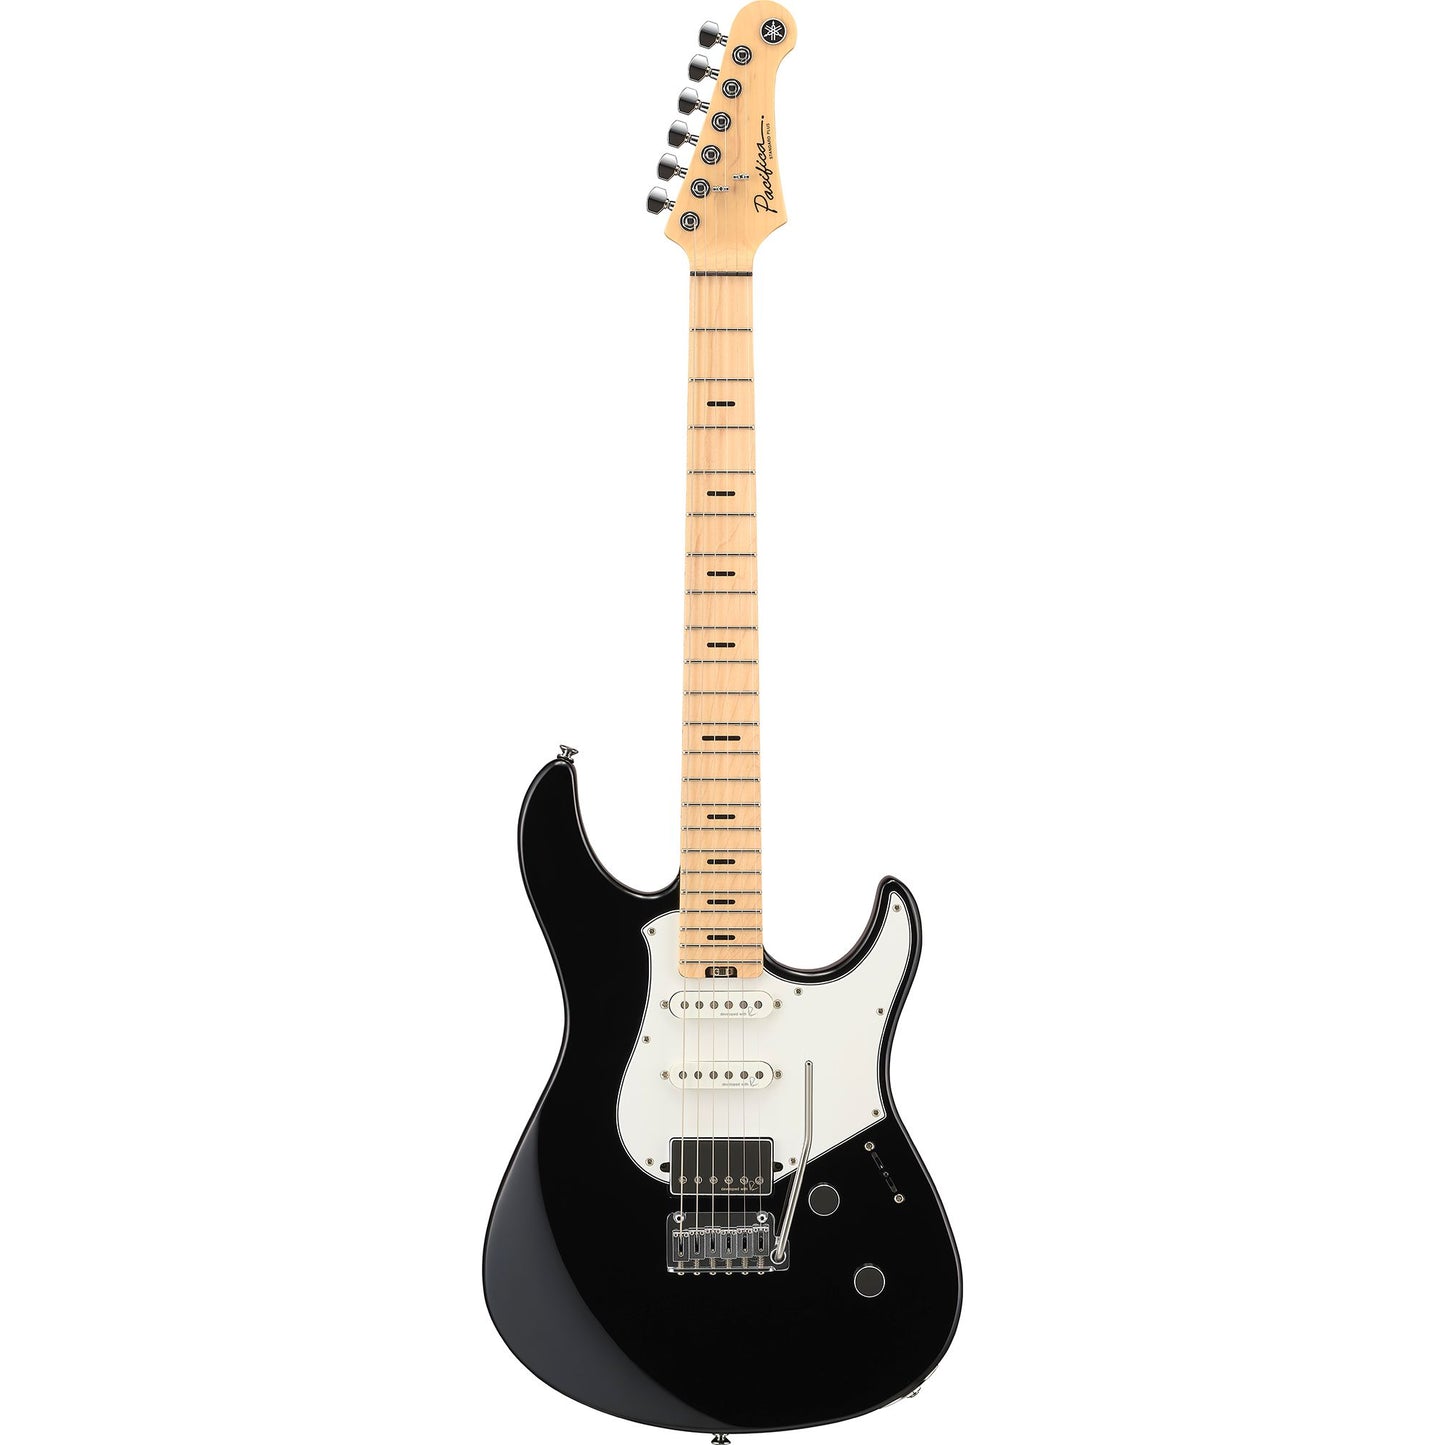 Yamaha Pacifica Standard Plus Electric Guitar - Maple Fingerboard, Black